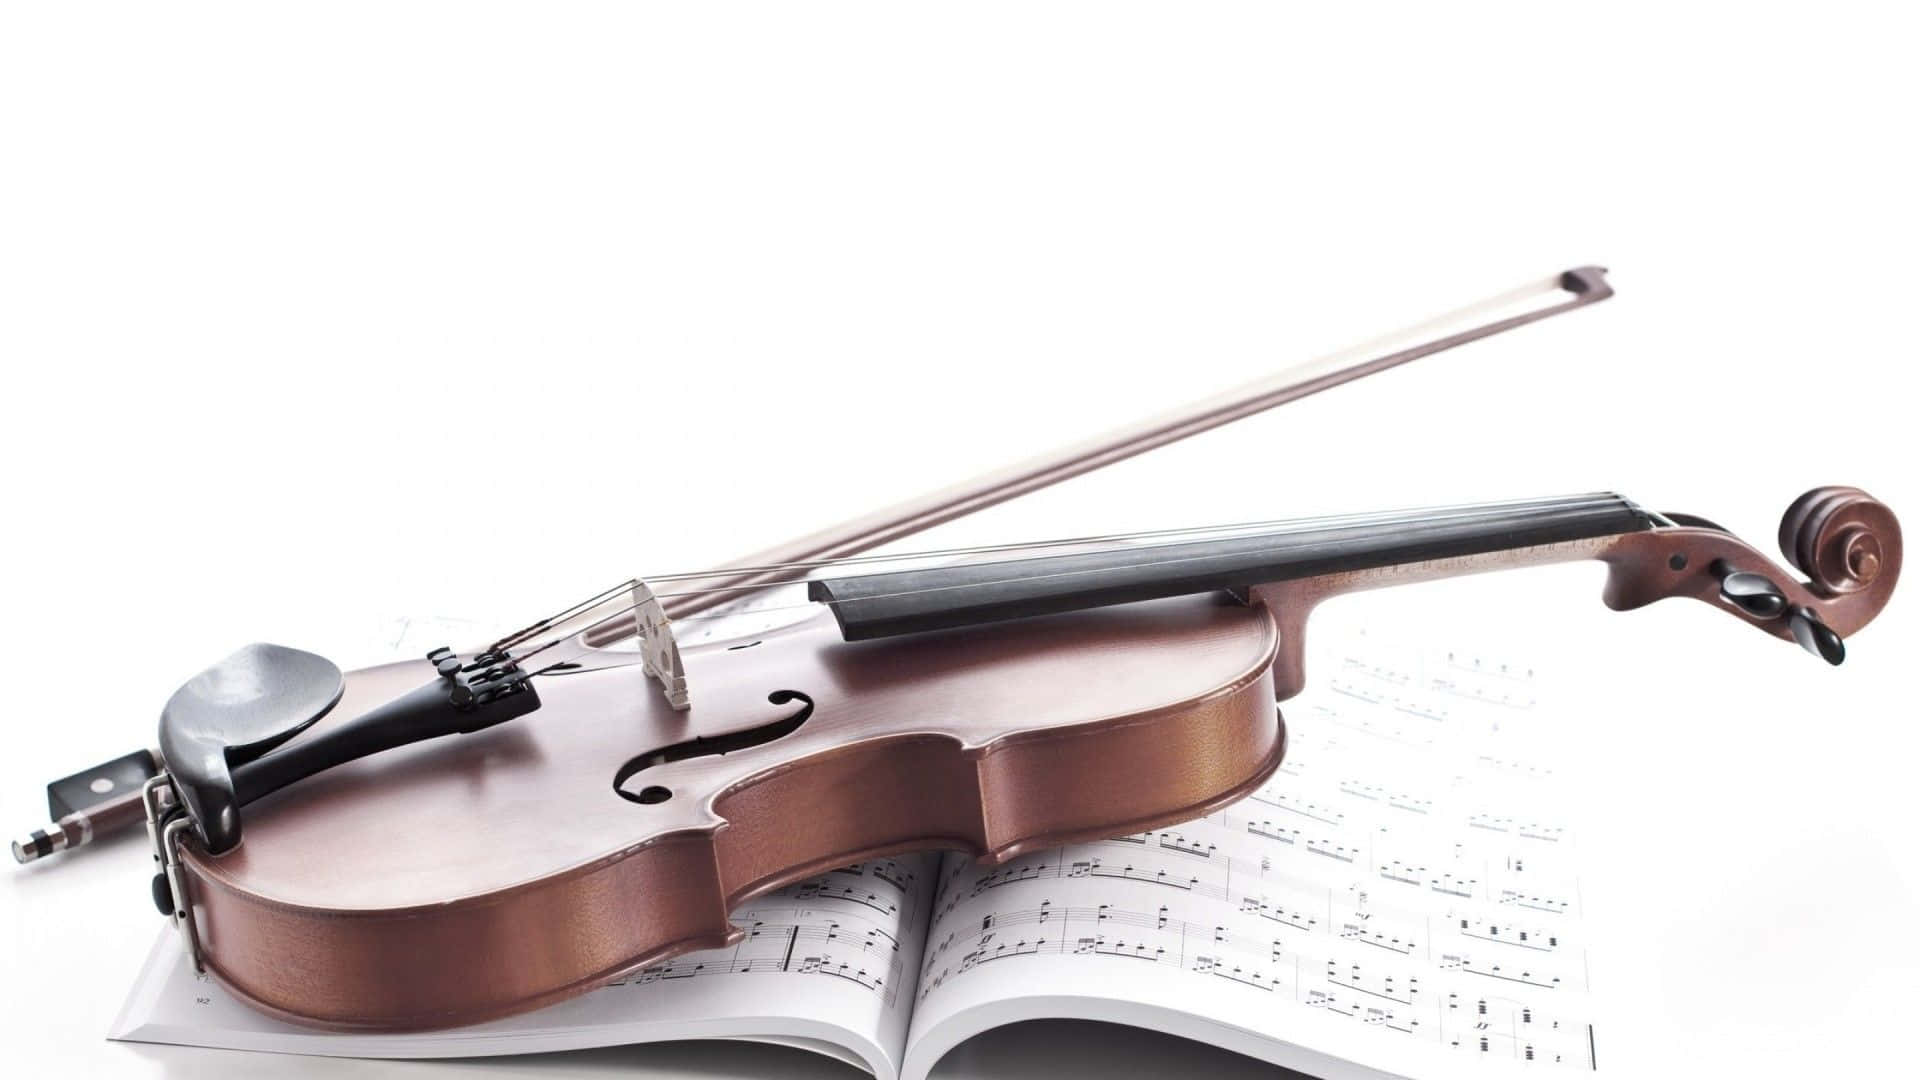 Download Simple Wooden Chordophone Violin Instrument Wallpaper | Wallpapers .com